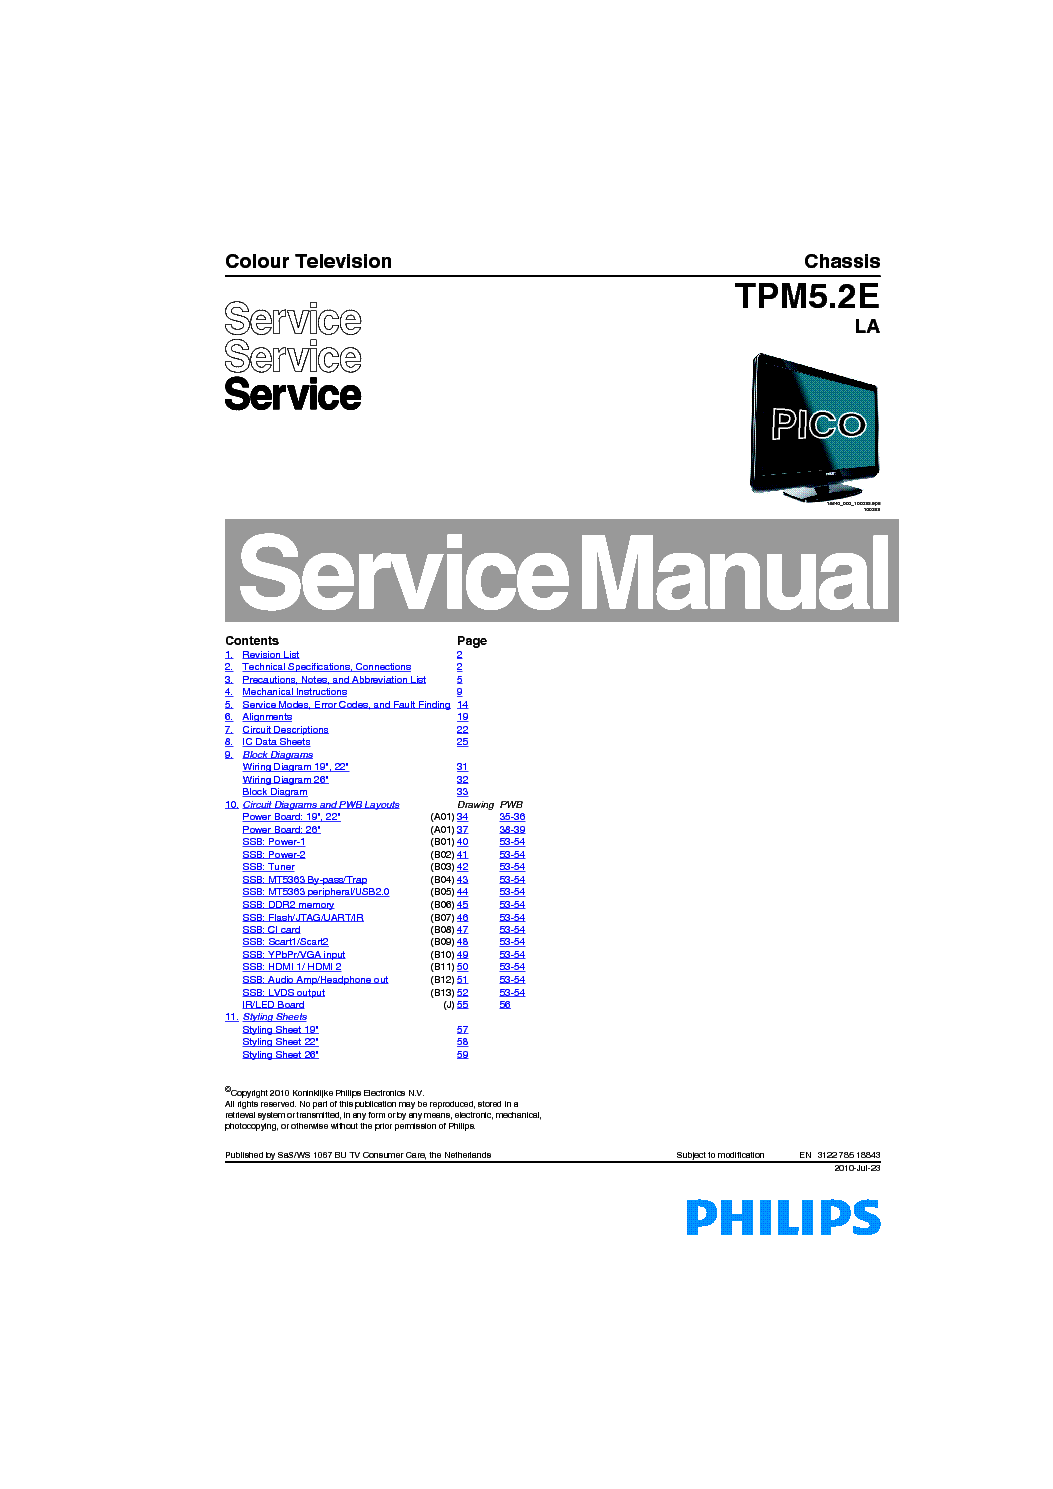 PHILIPS CHASSIS TPM5.2E-LA SM service manual (1st page)